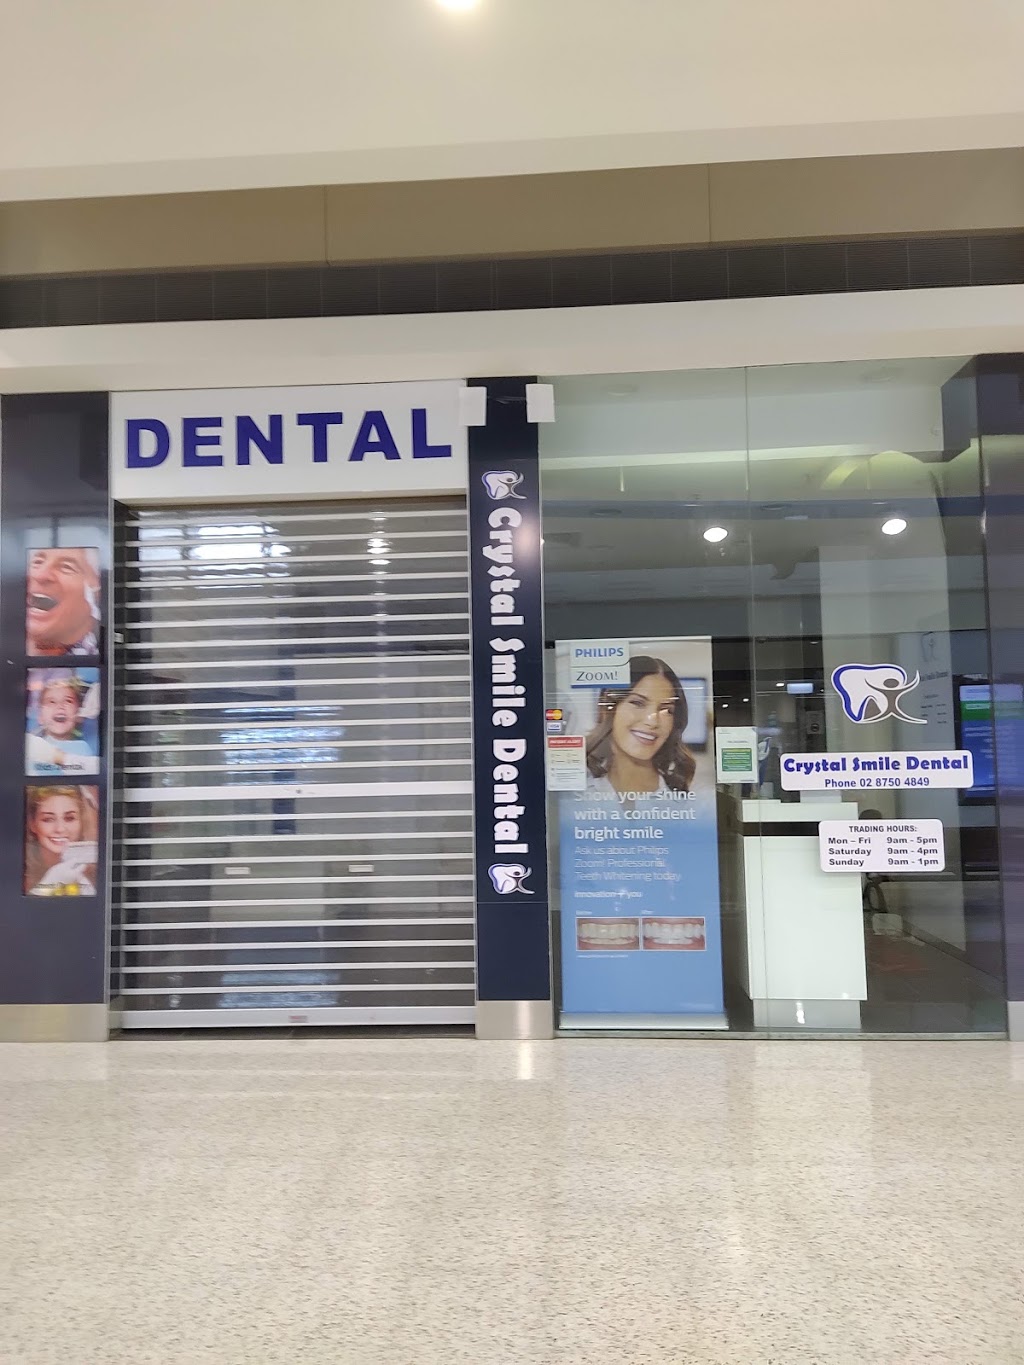 Crystal smile dental | dentist | Shop 74, Glenquarie shopping centre, Macquarie Fields NSW 2564, Australia | 0287504849 OR +61 2 8750 4849